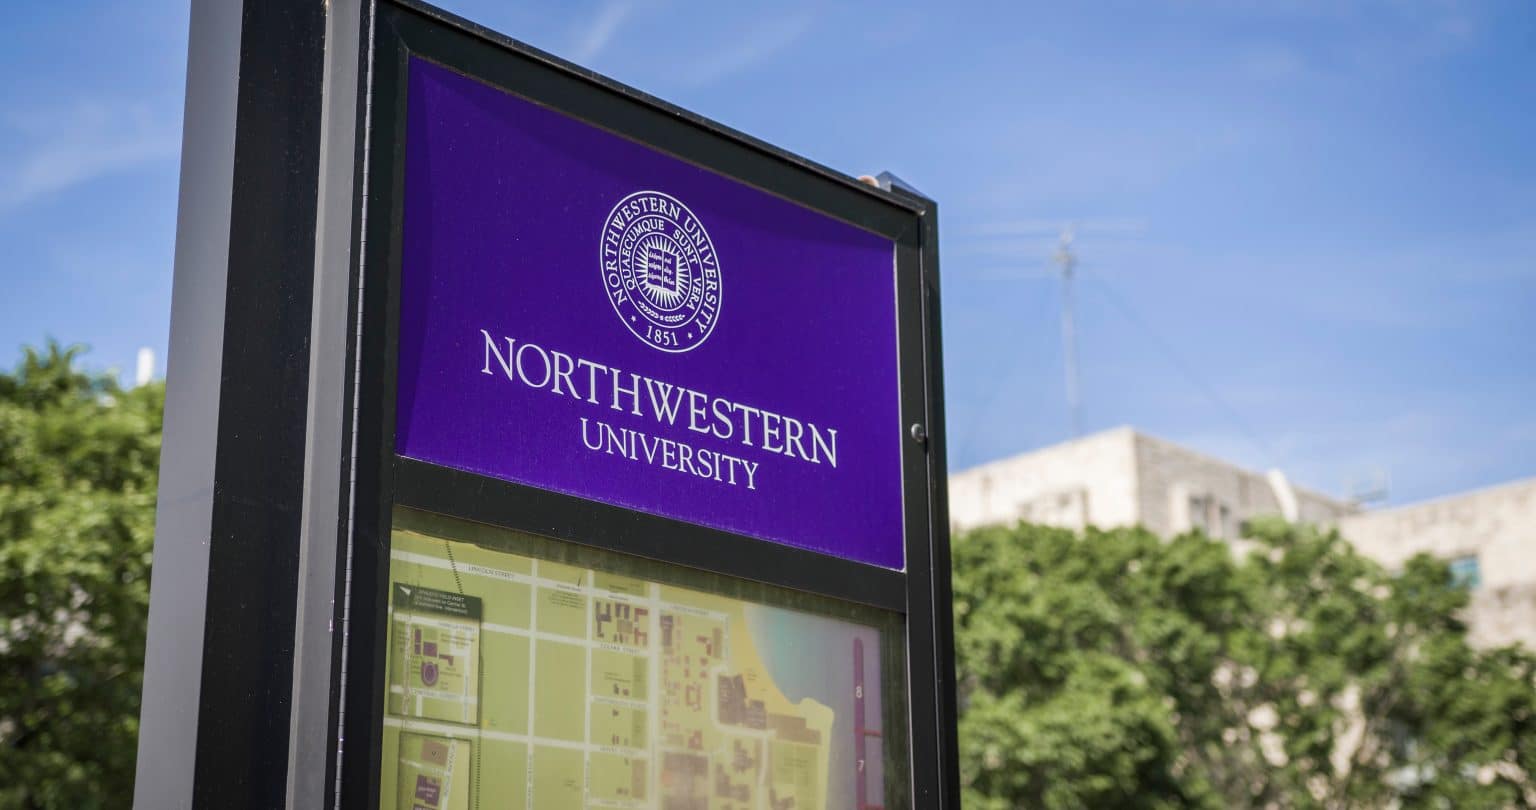 Northwestern University sign with campus map below